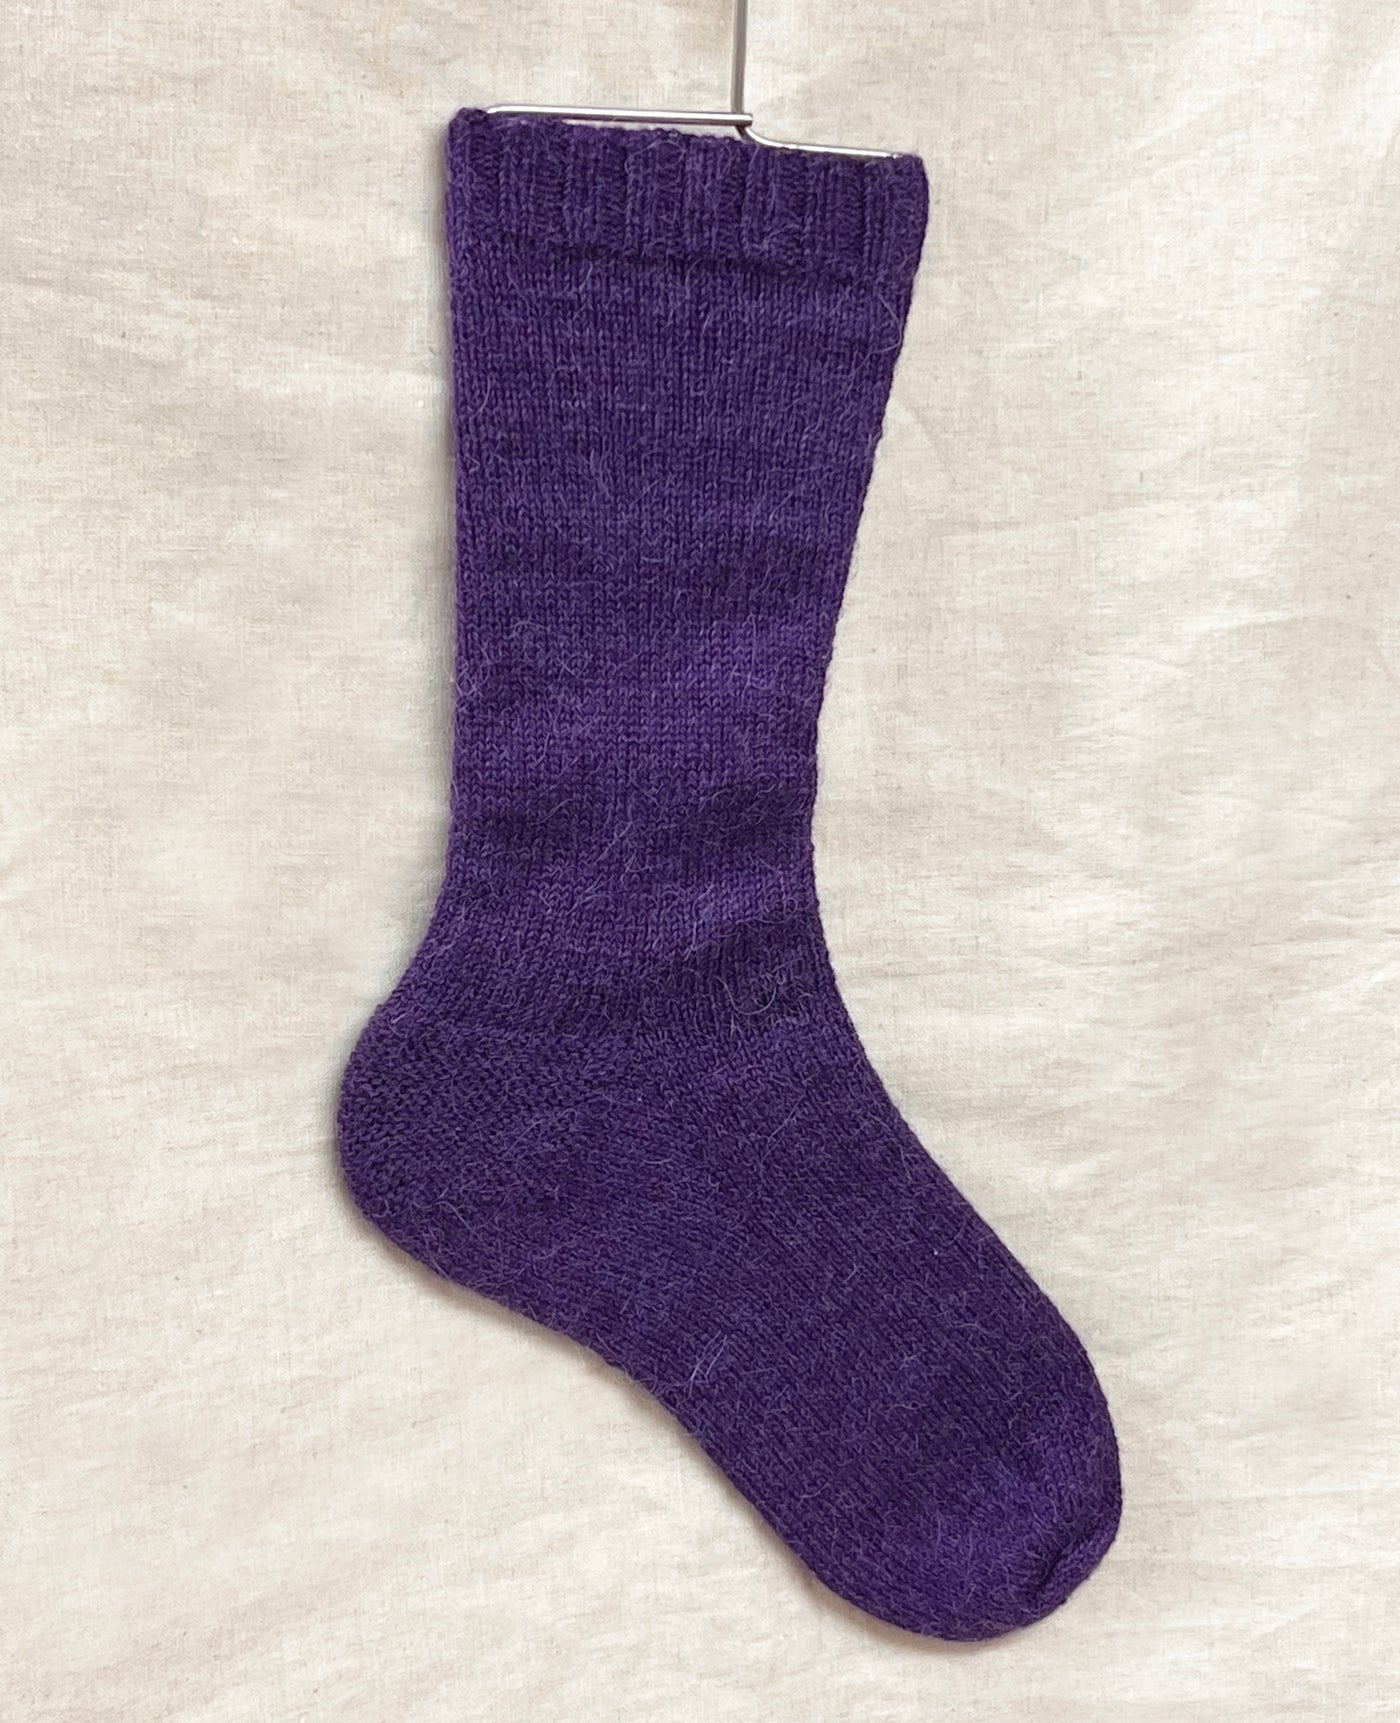 Spundamentals Basic Sock Kit, Kelbourne Woolens Perennial